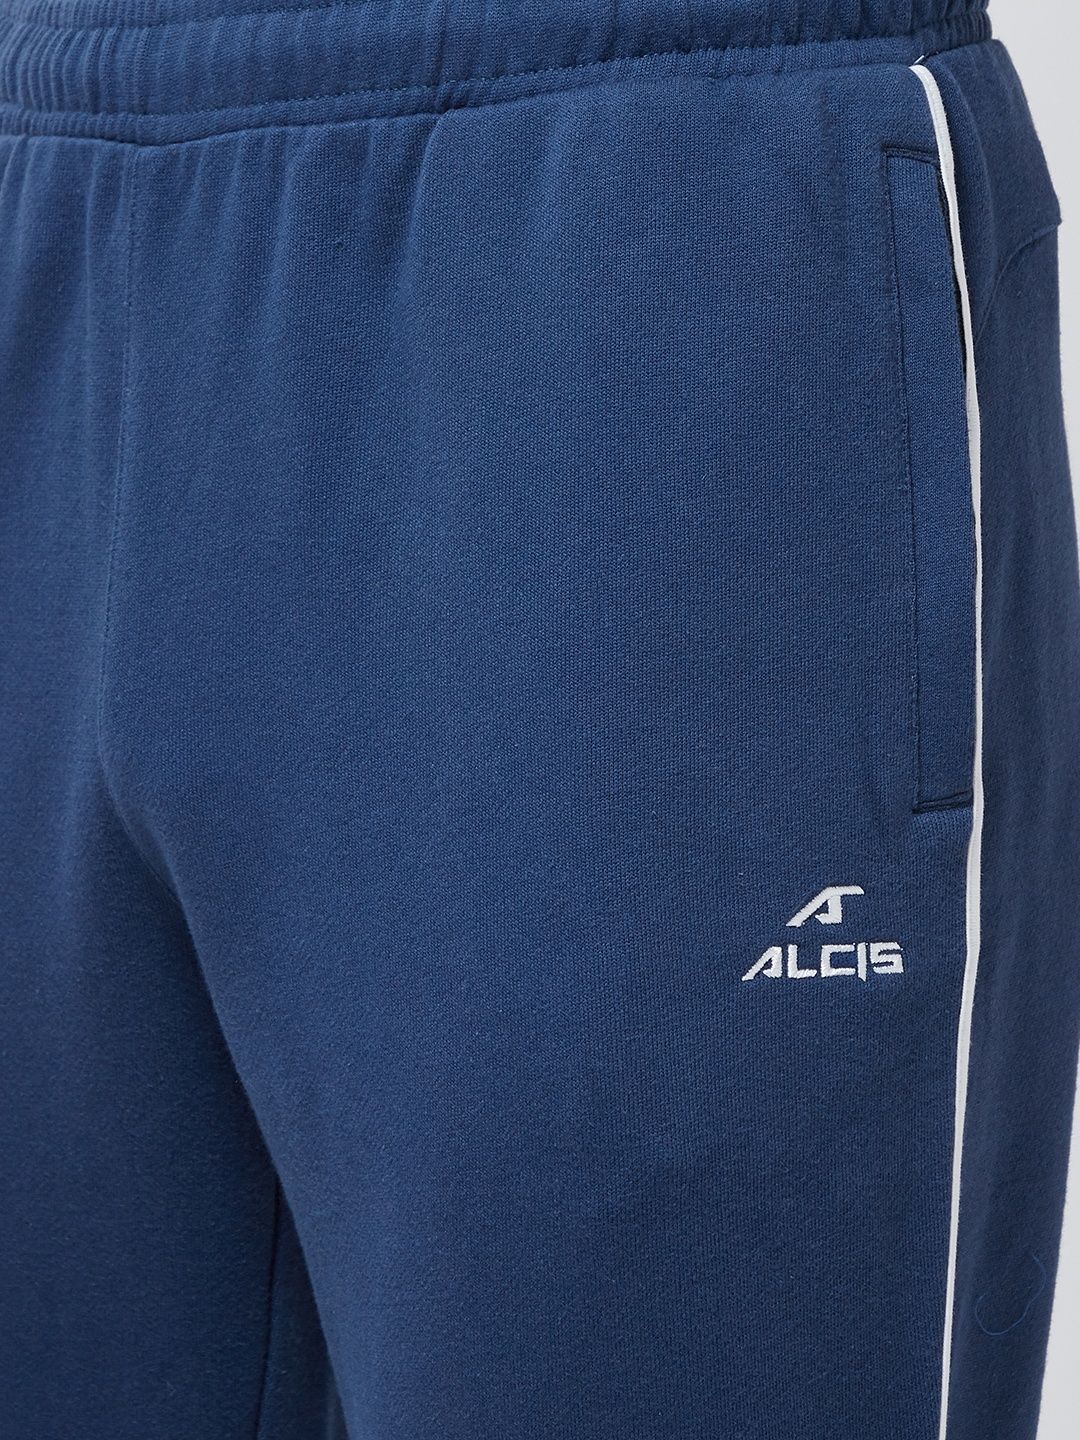 Alcis Mens Navy Blue Lifestyle Joggers - Buy Alcis Mens Navy Blue ...